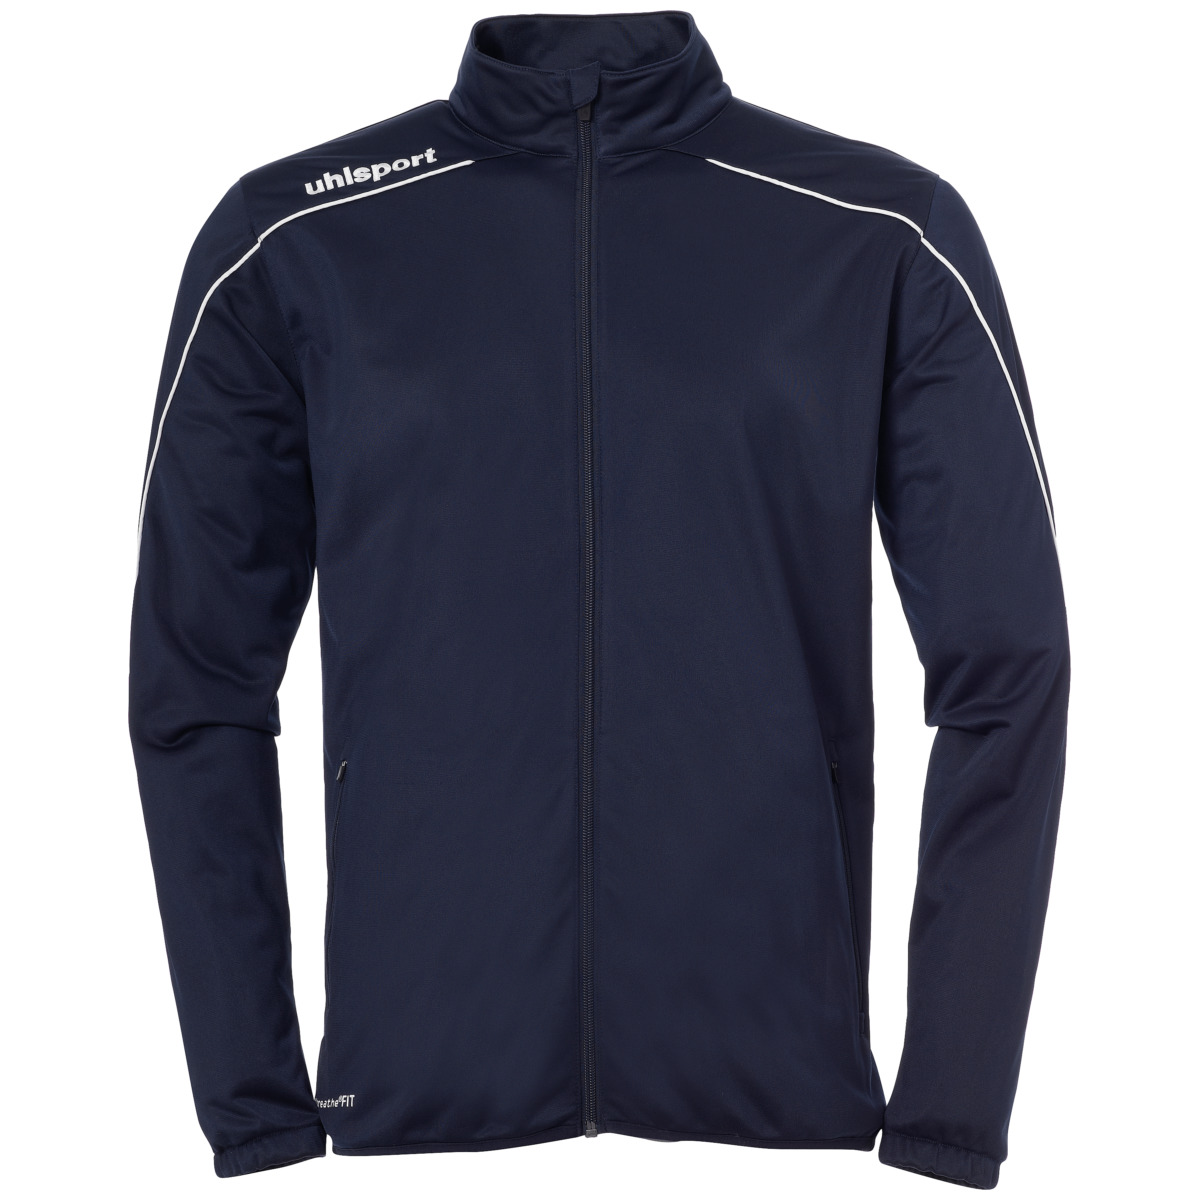 uhlsport track jackets | uhlsport shop